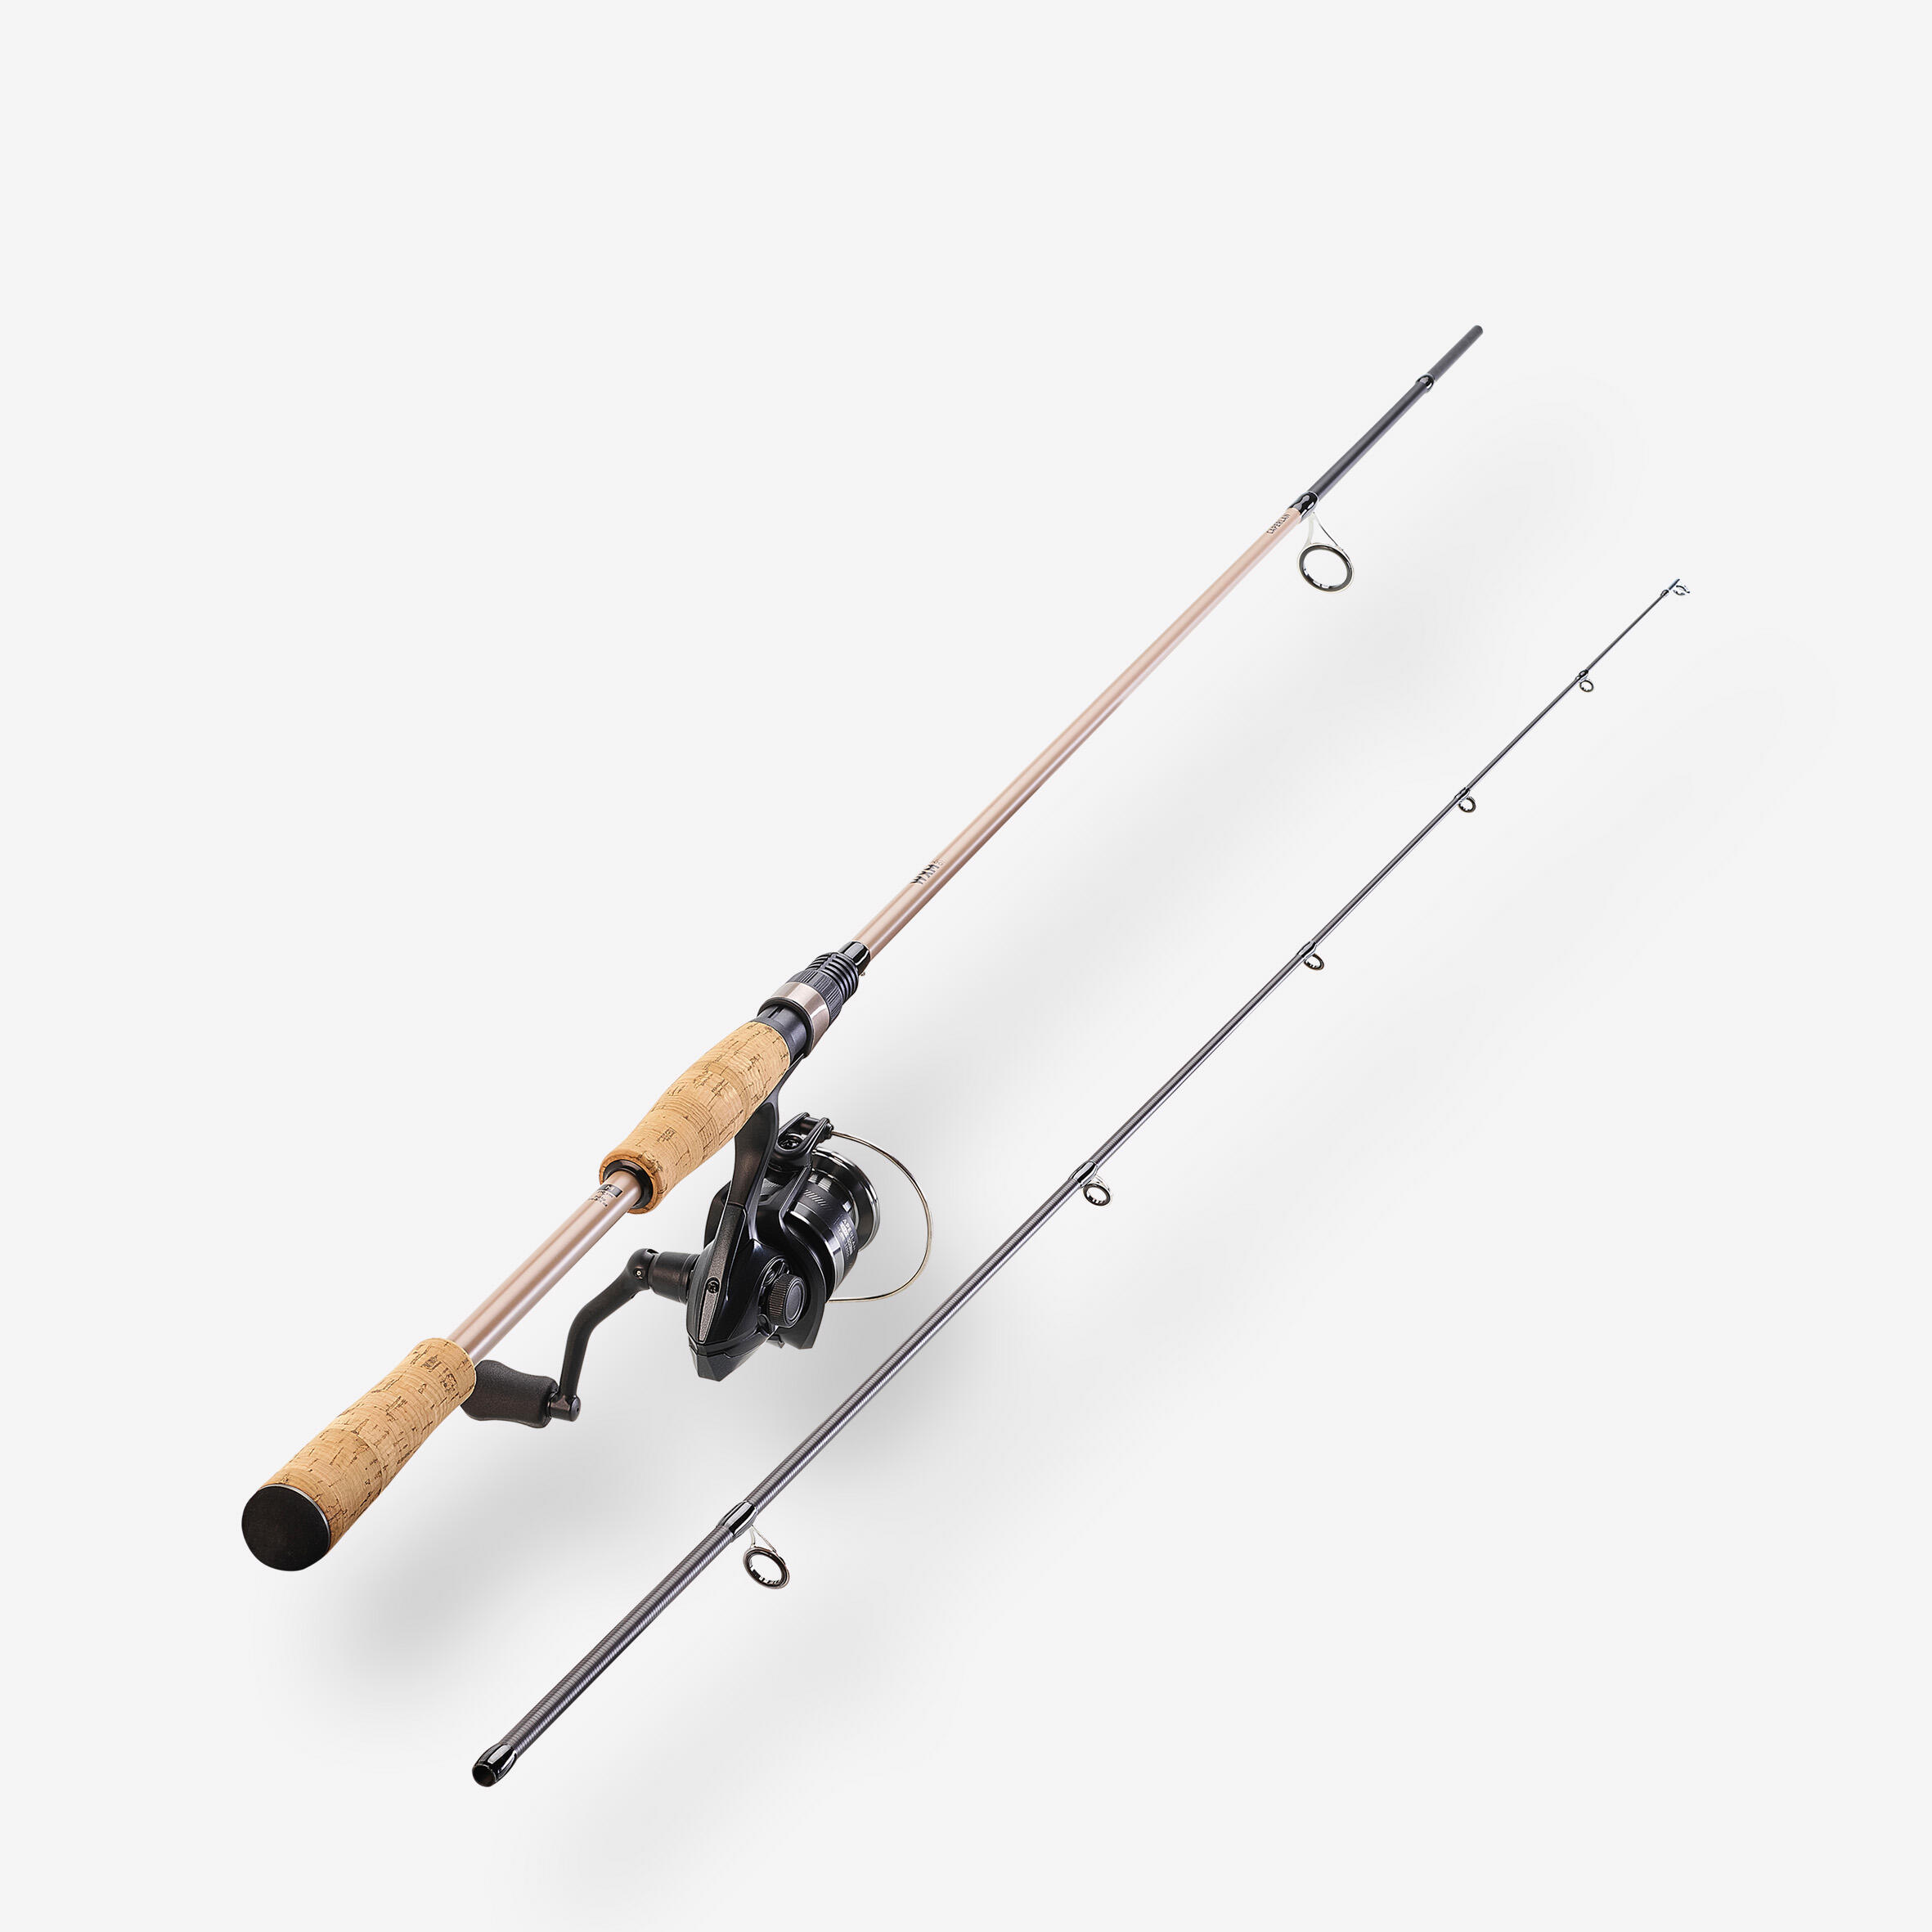 WXM-5 210 MH Lure Fishing Rod - black, Grey - Caperlan - Decathlon